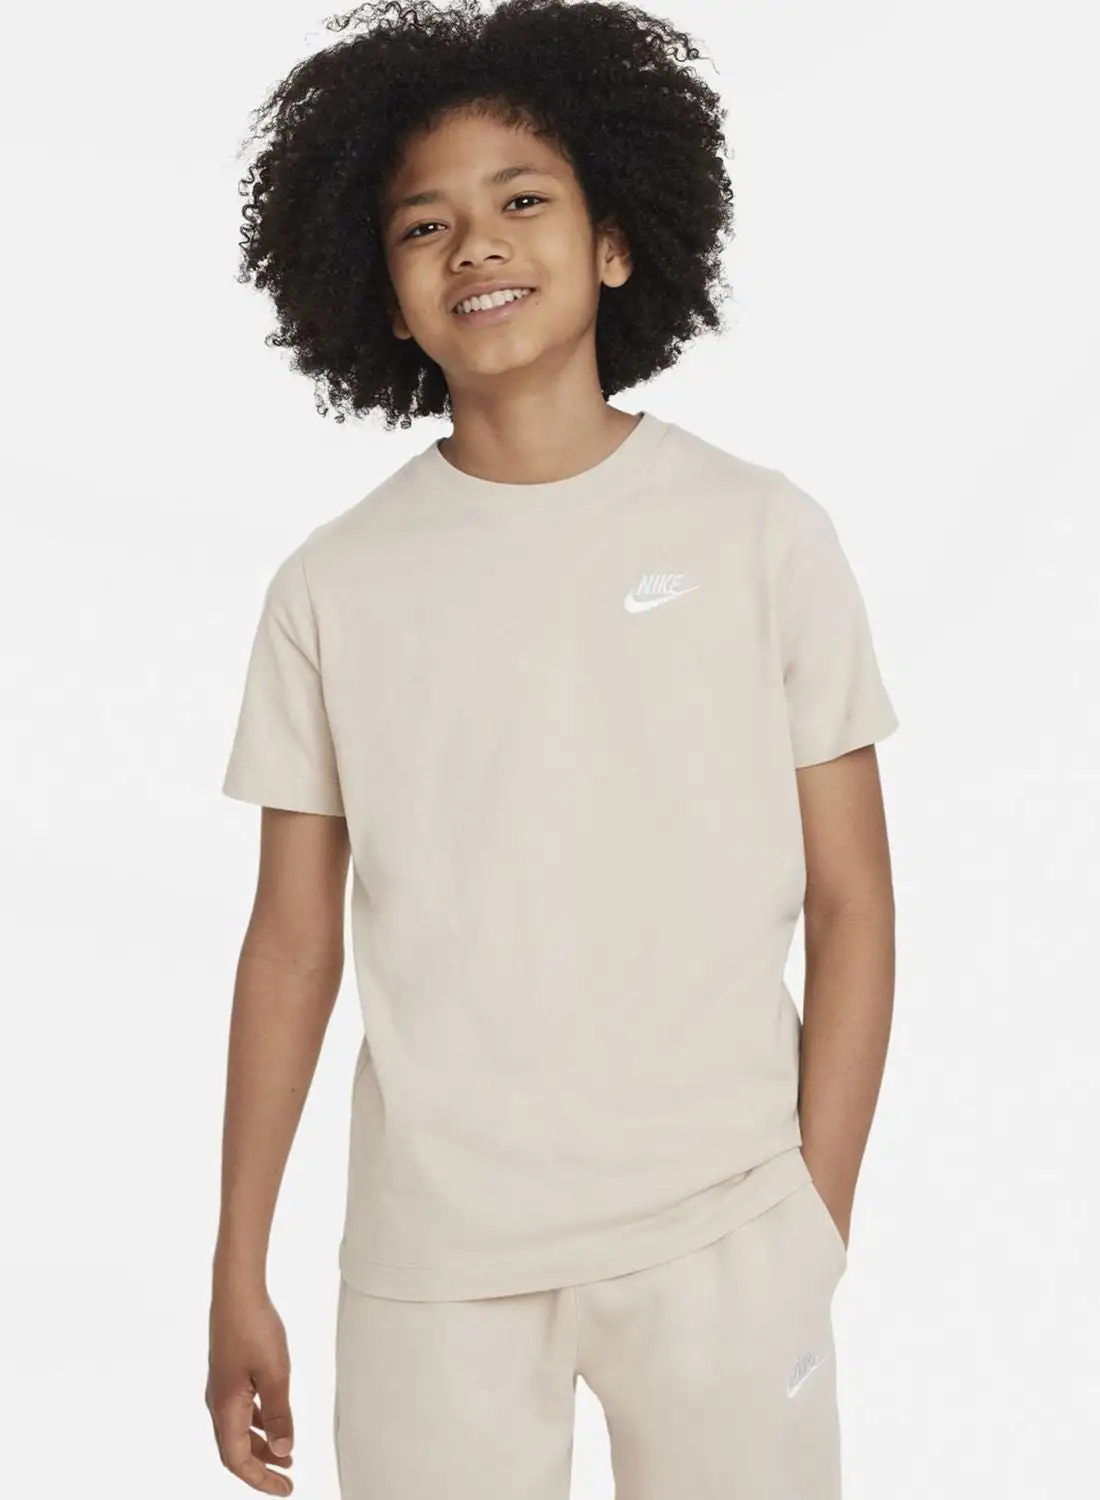 Nike Kids Futura T-Shirt